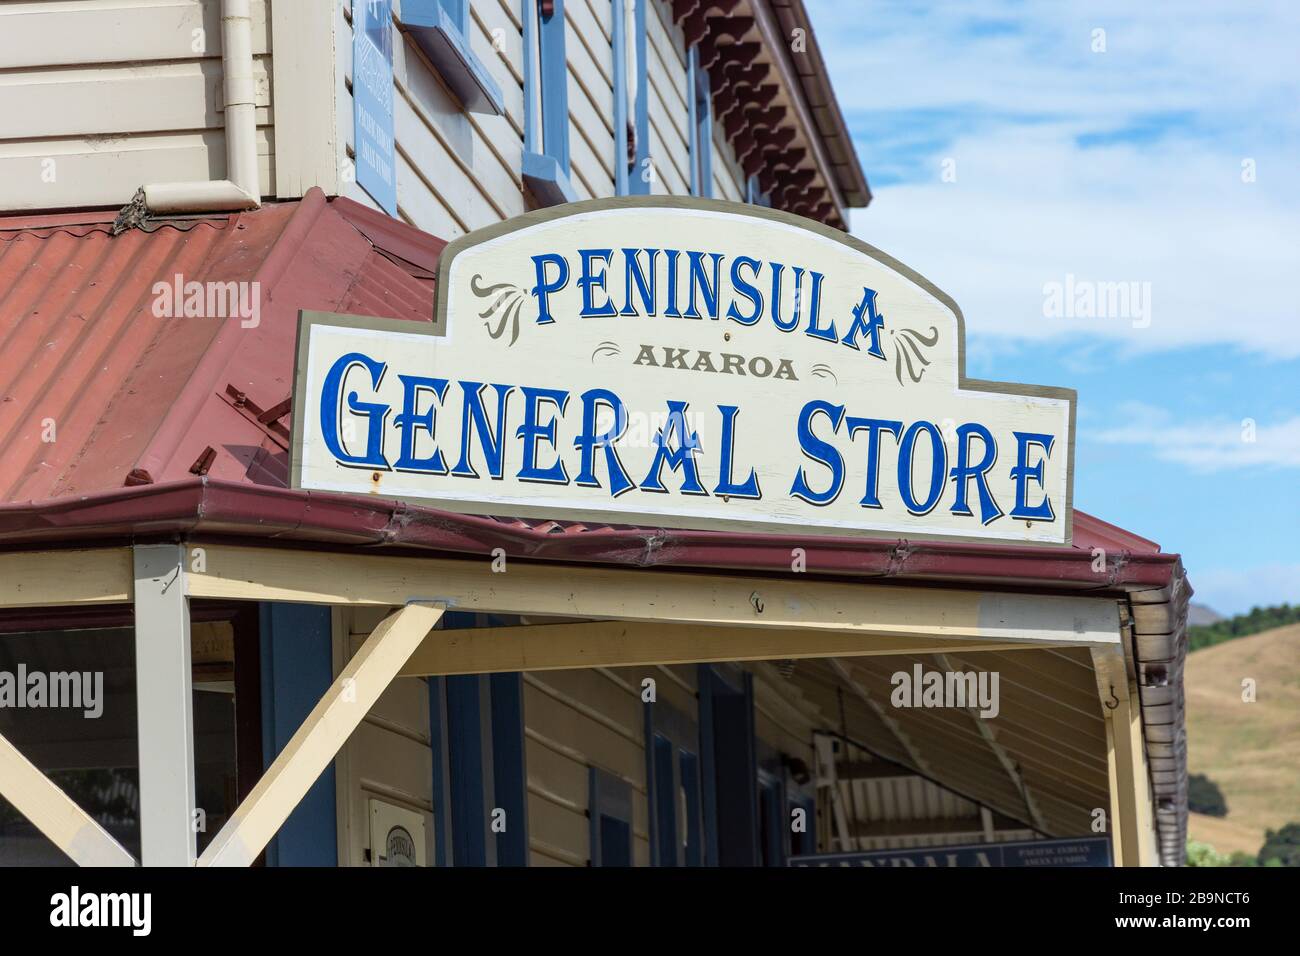 Akaroa Peninsula General Store segno, Rue Lavaud, Akaroa, Banks Peninsula, Canterbury Regione, Nuova Zelanda Foto Stock